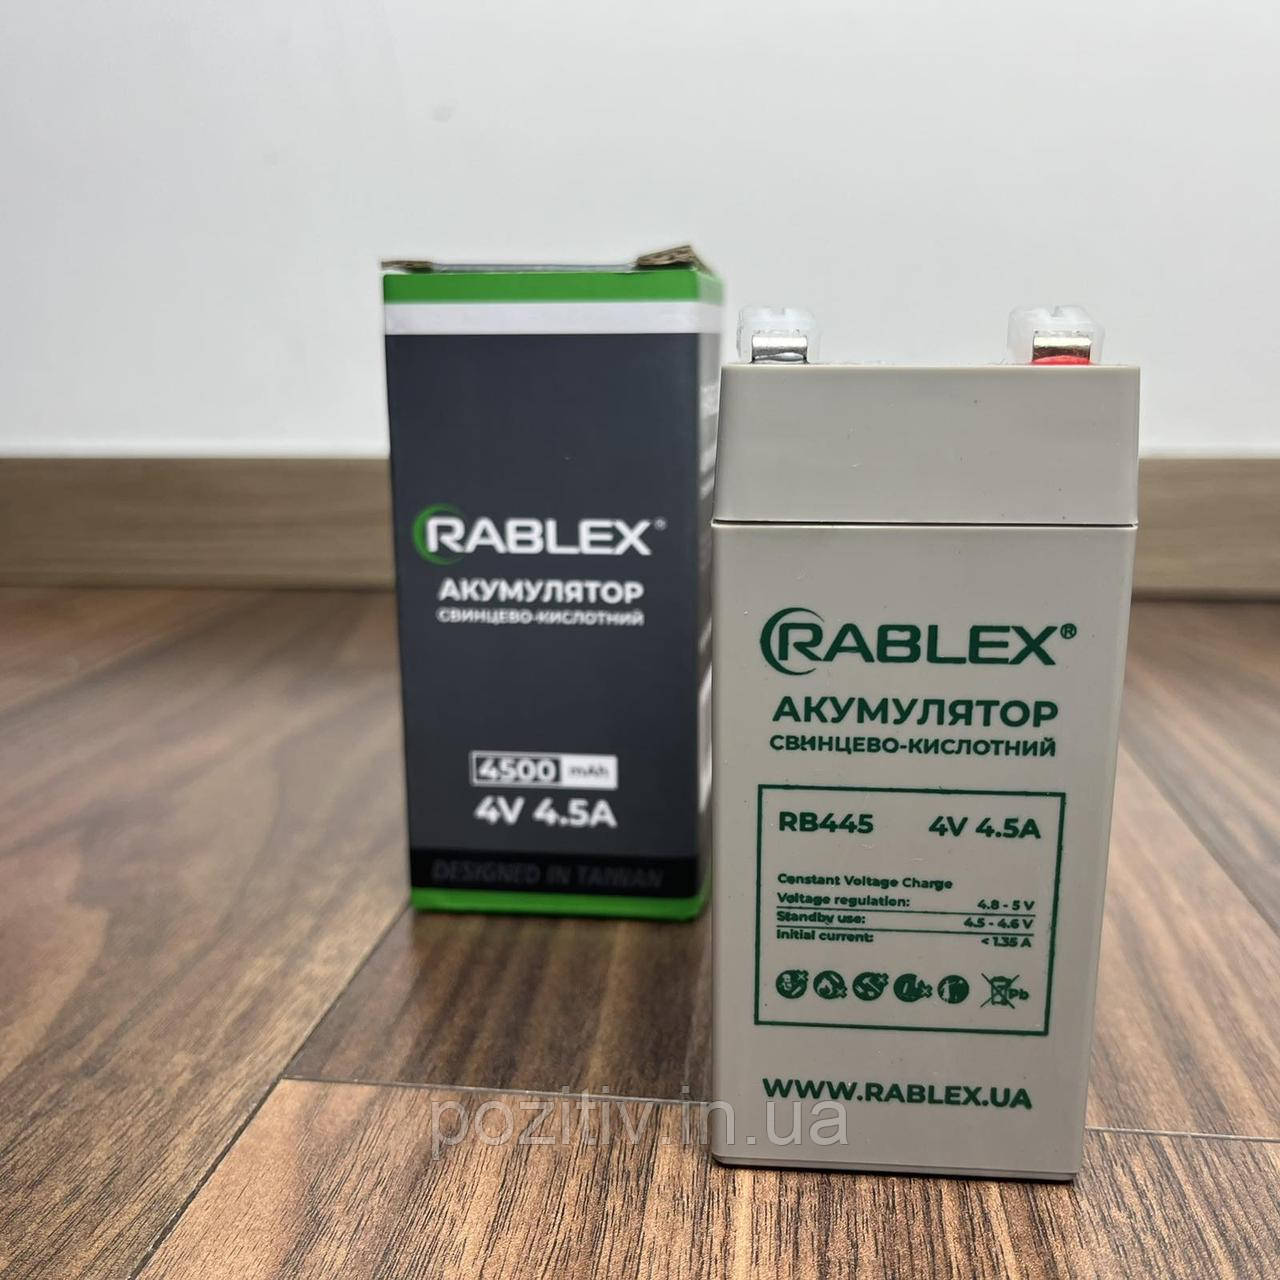 Акумулятор rablex 4V 4,5 А 4500 mah